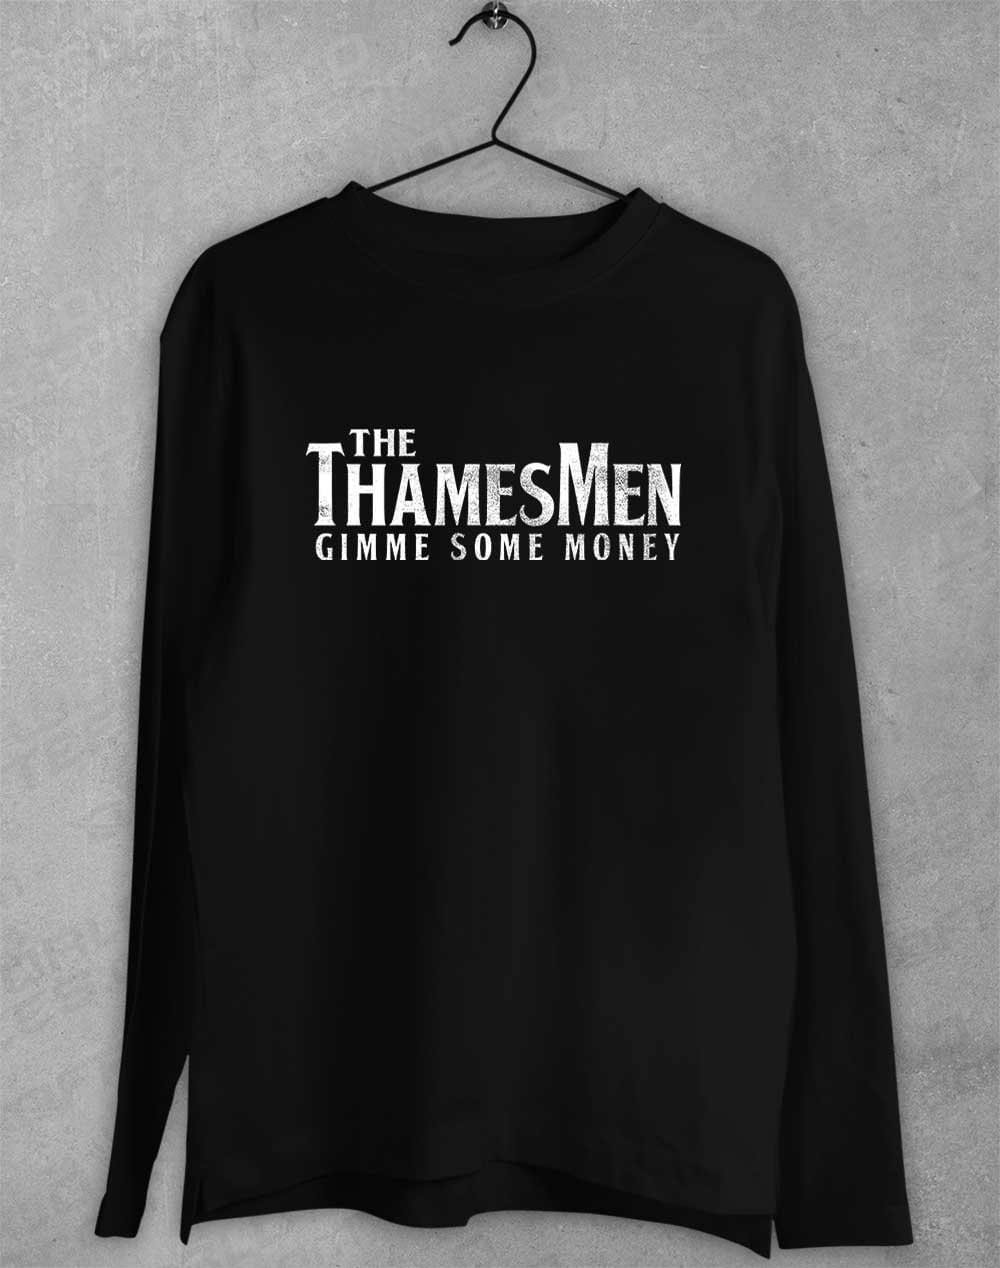 The Thamesmen Gimme Some Money Long Sleeve T-Shirt S / Black  - Off World Tees